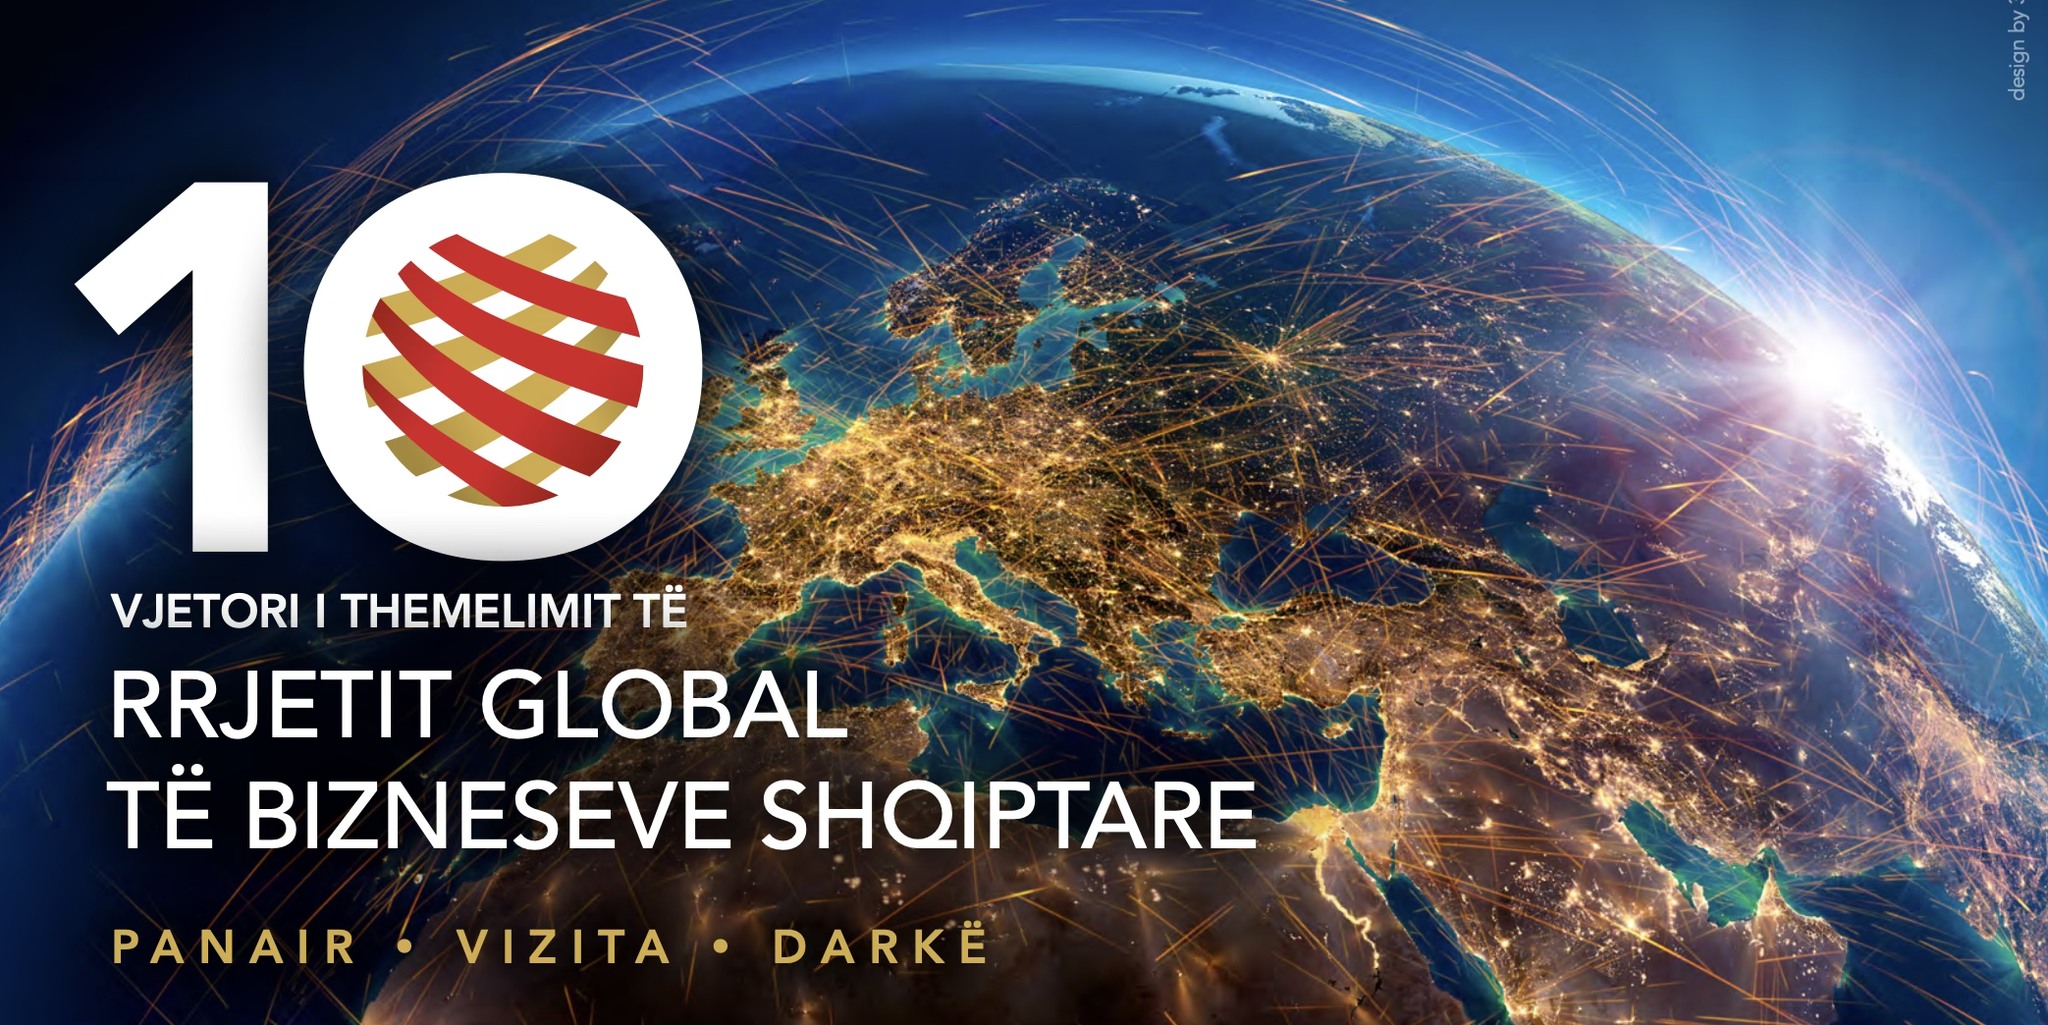 Rrjeti Global i Bizneseve Shqiptare feston 10 vjetorin